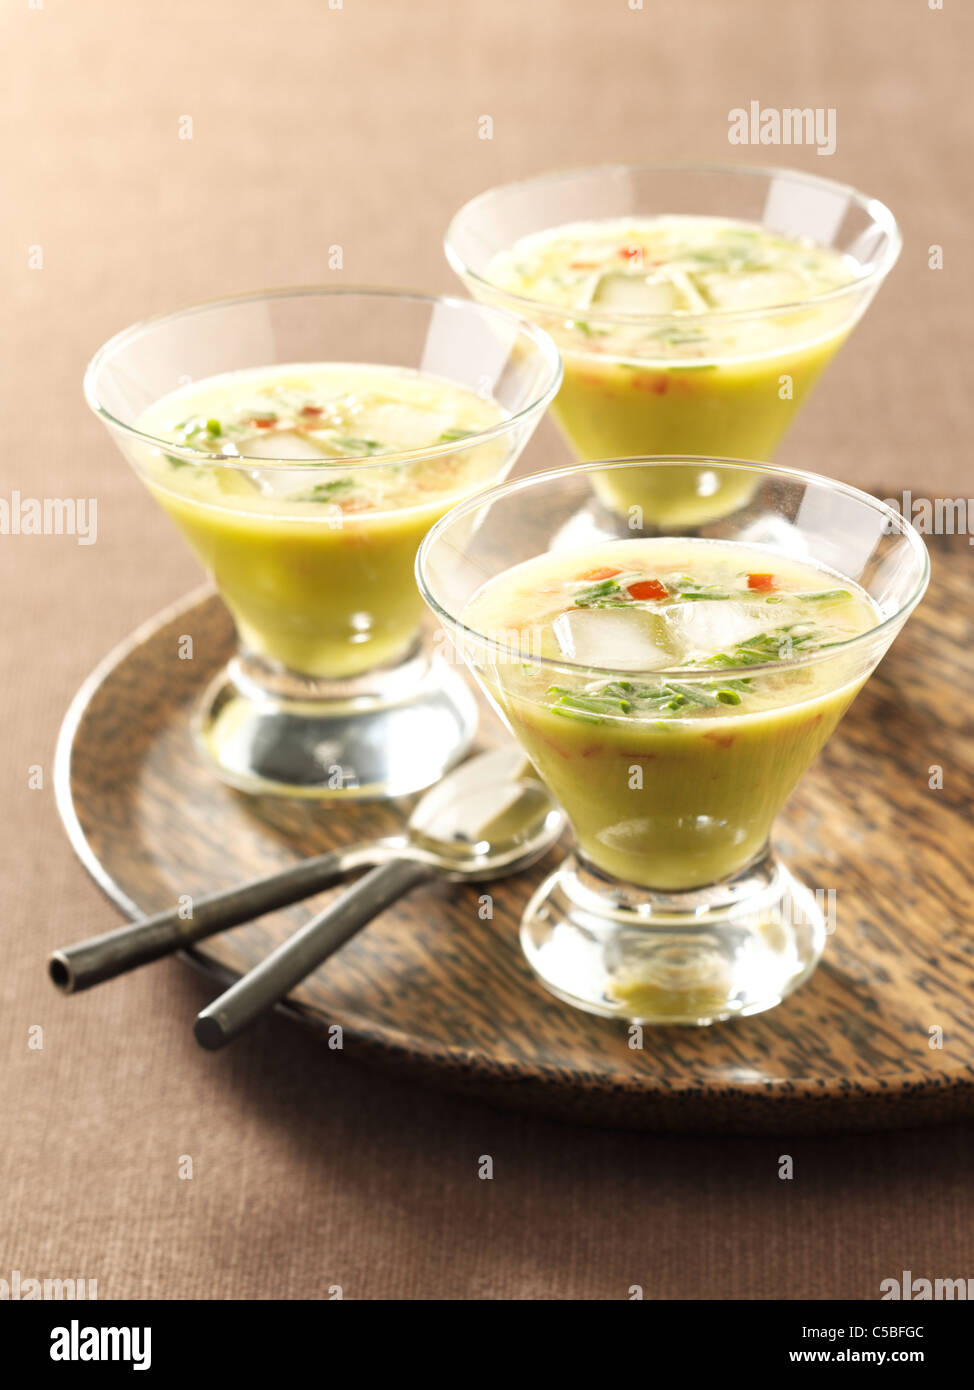 Chilled avocado soup Stock Photo